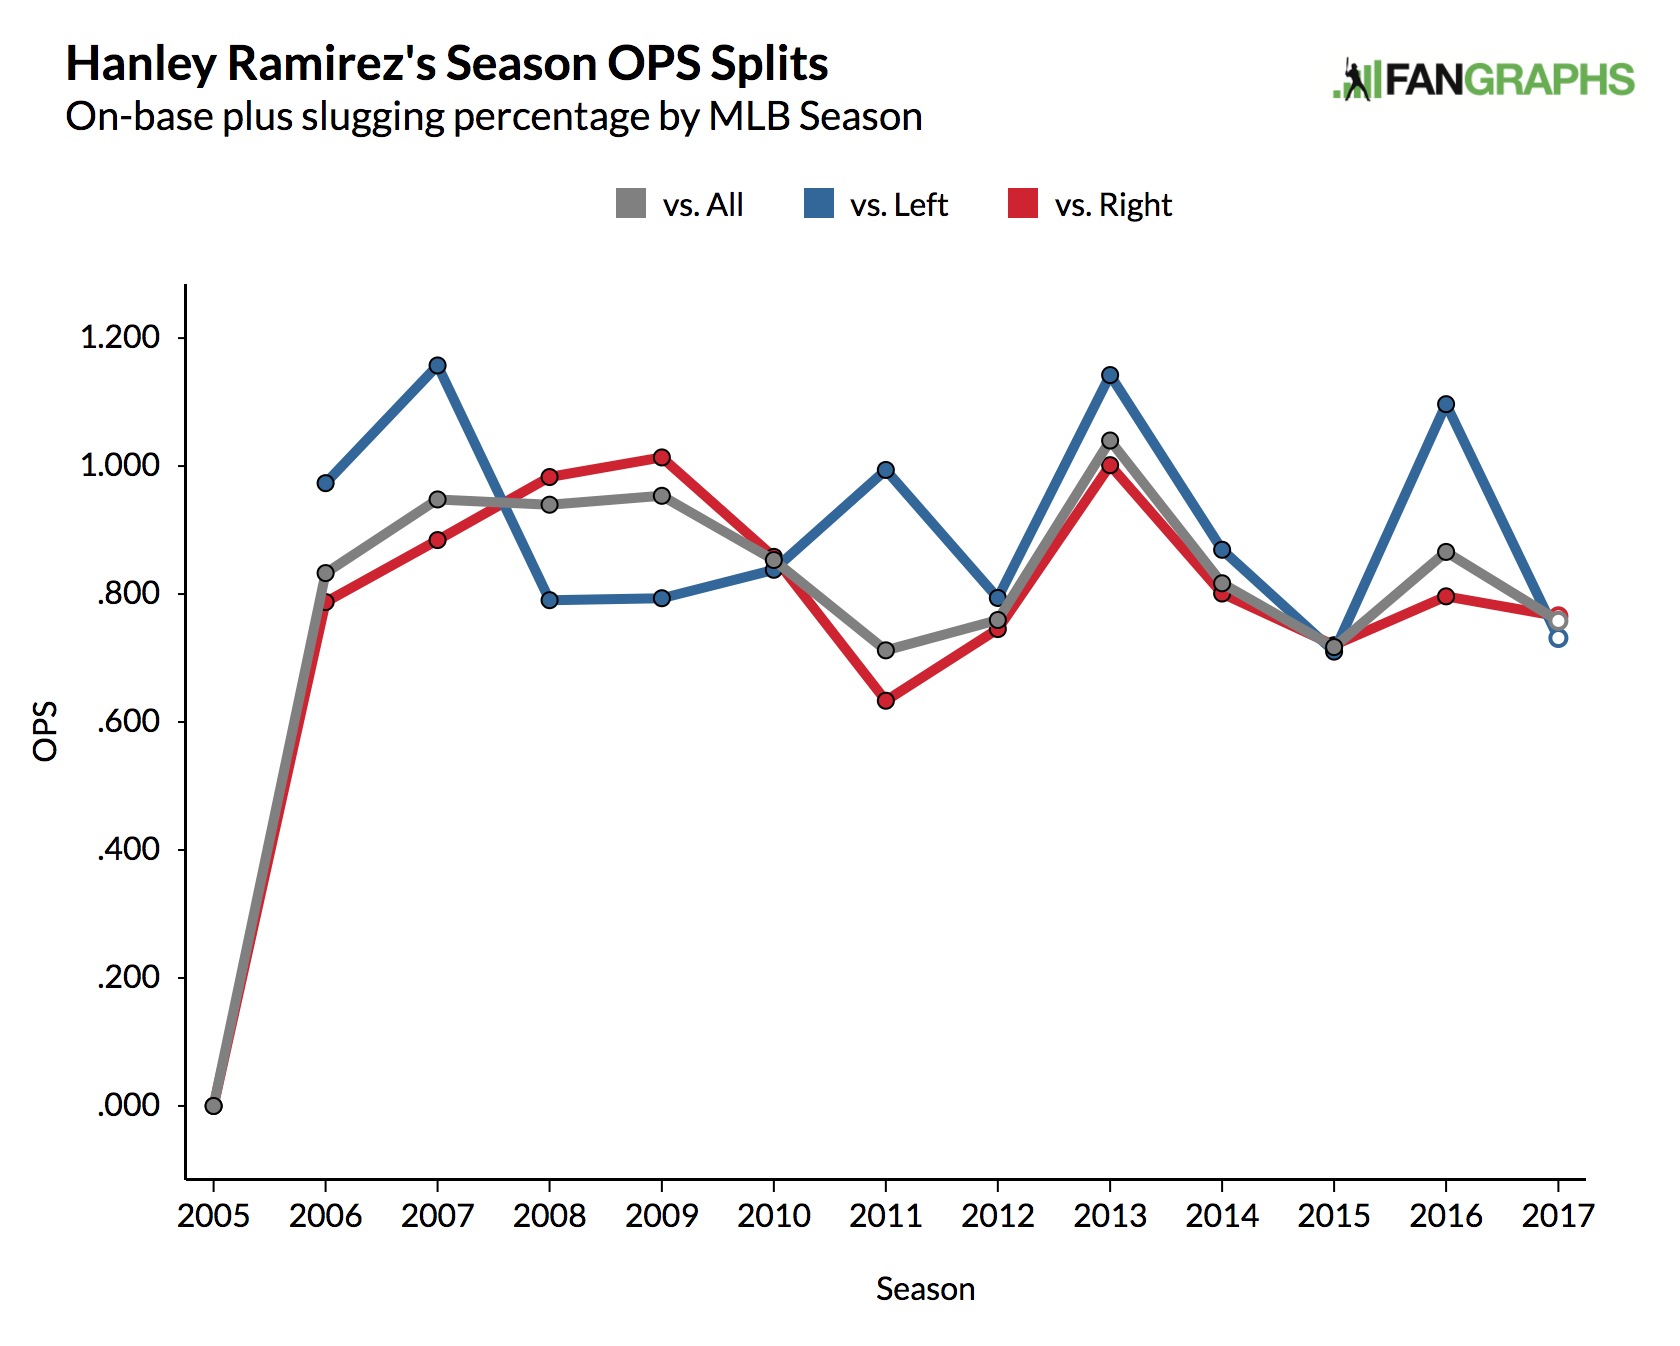 Hanley Ramirez OPS by Season